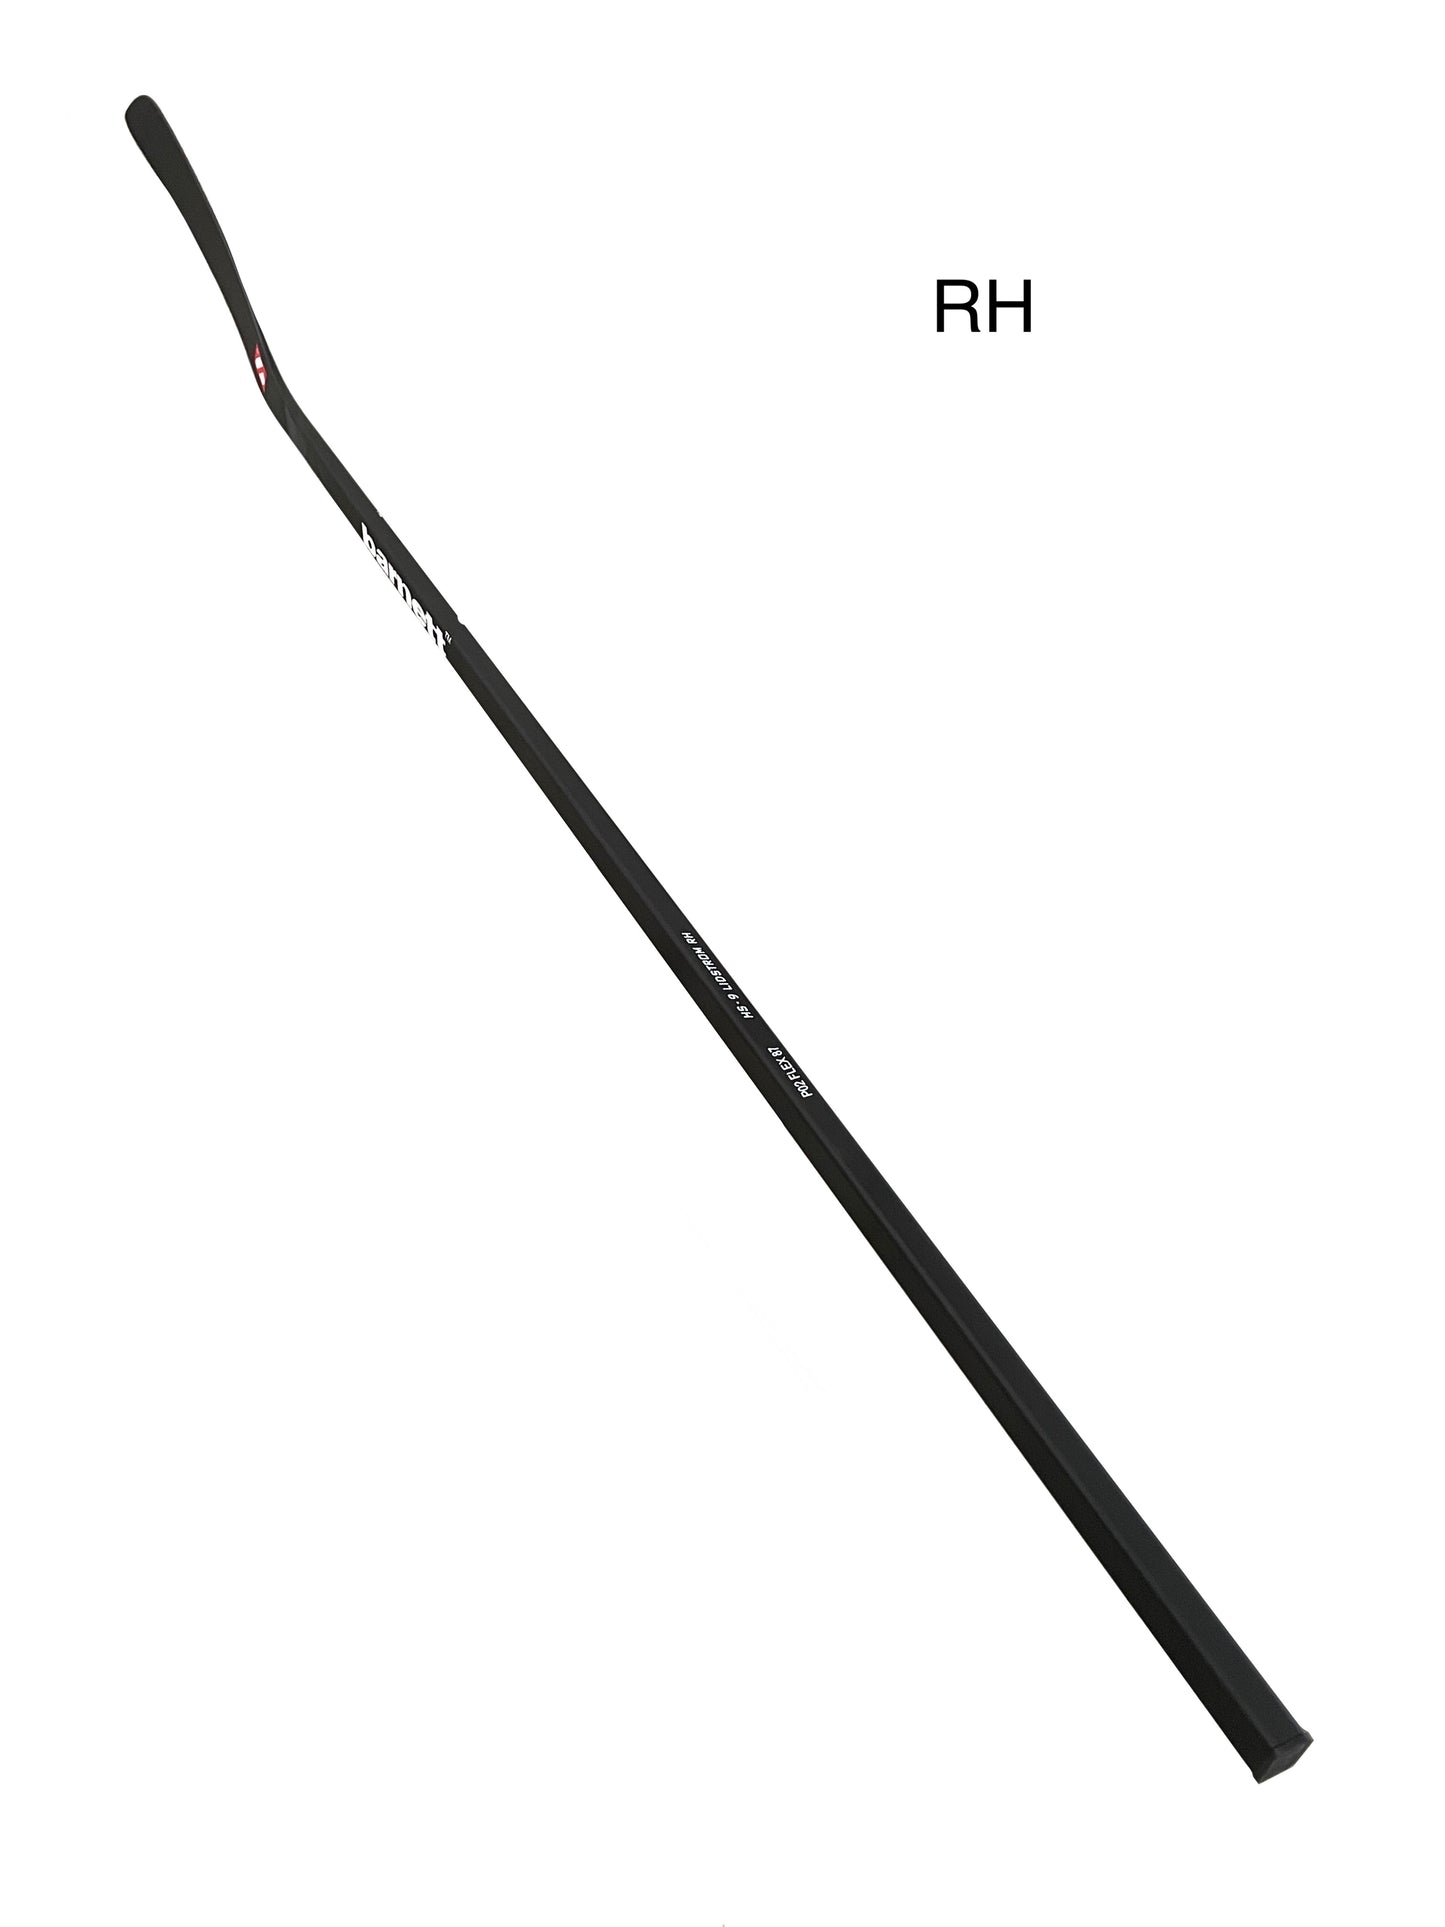 HS-Junior carbon hockey stick